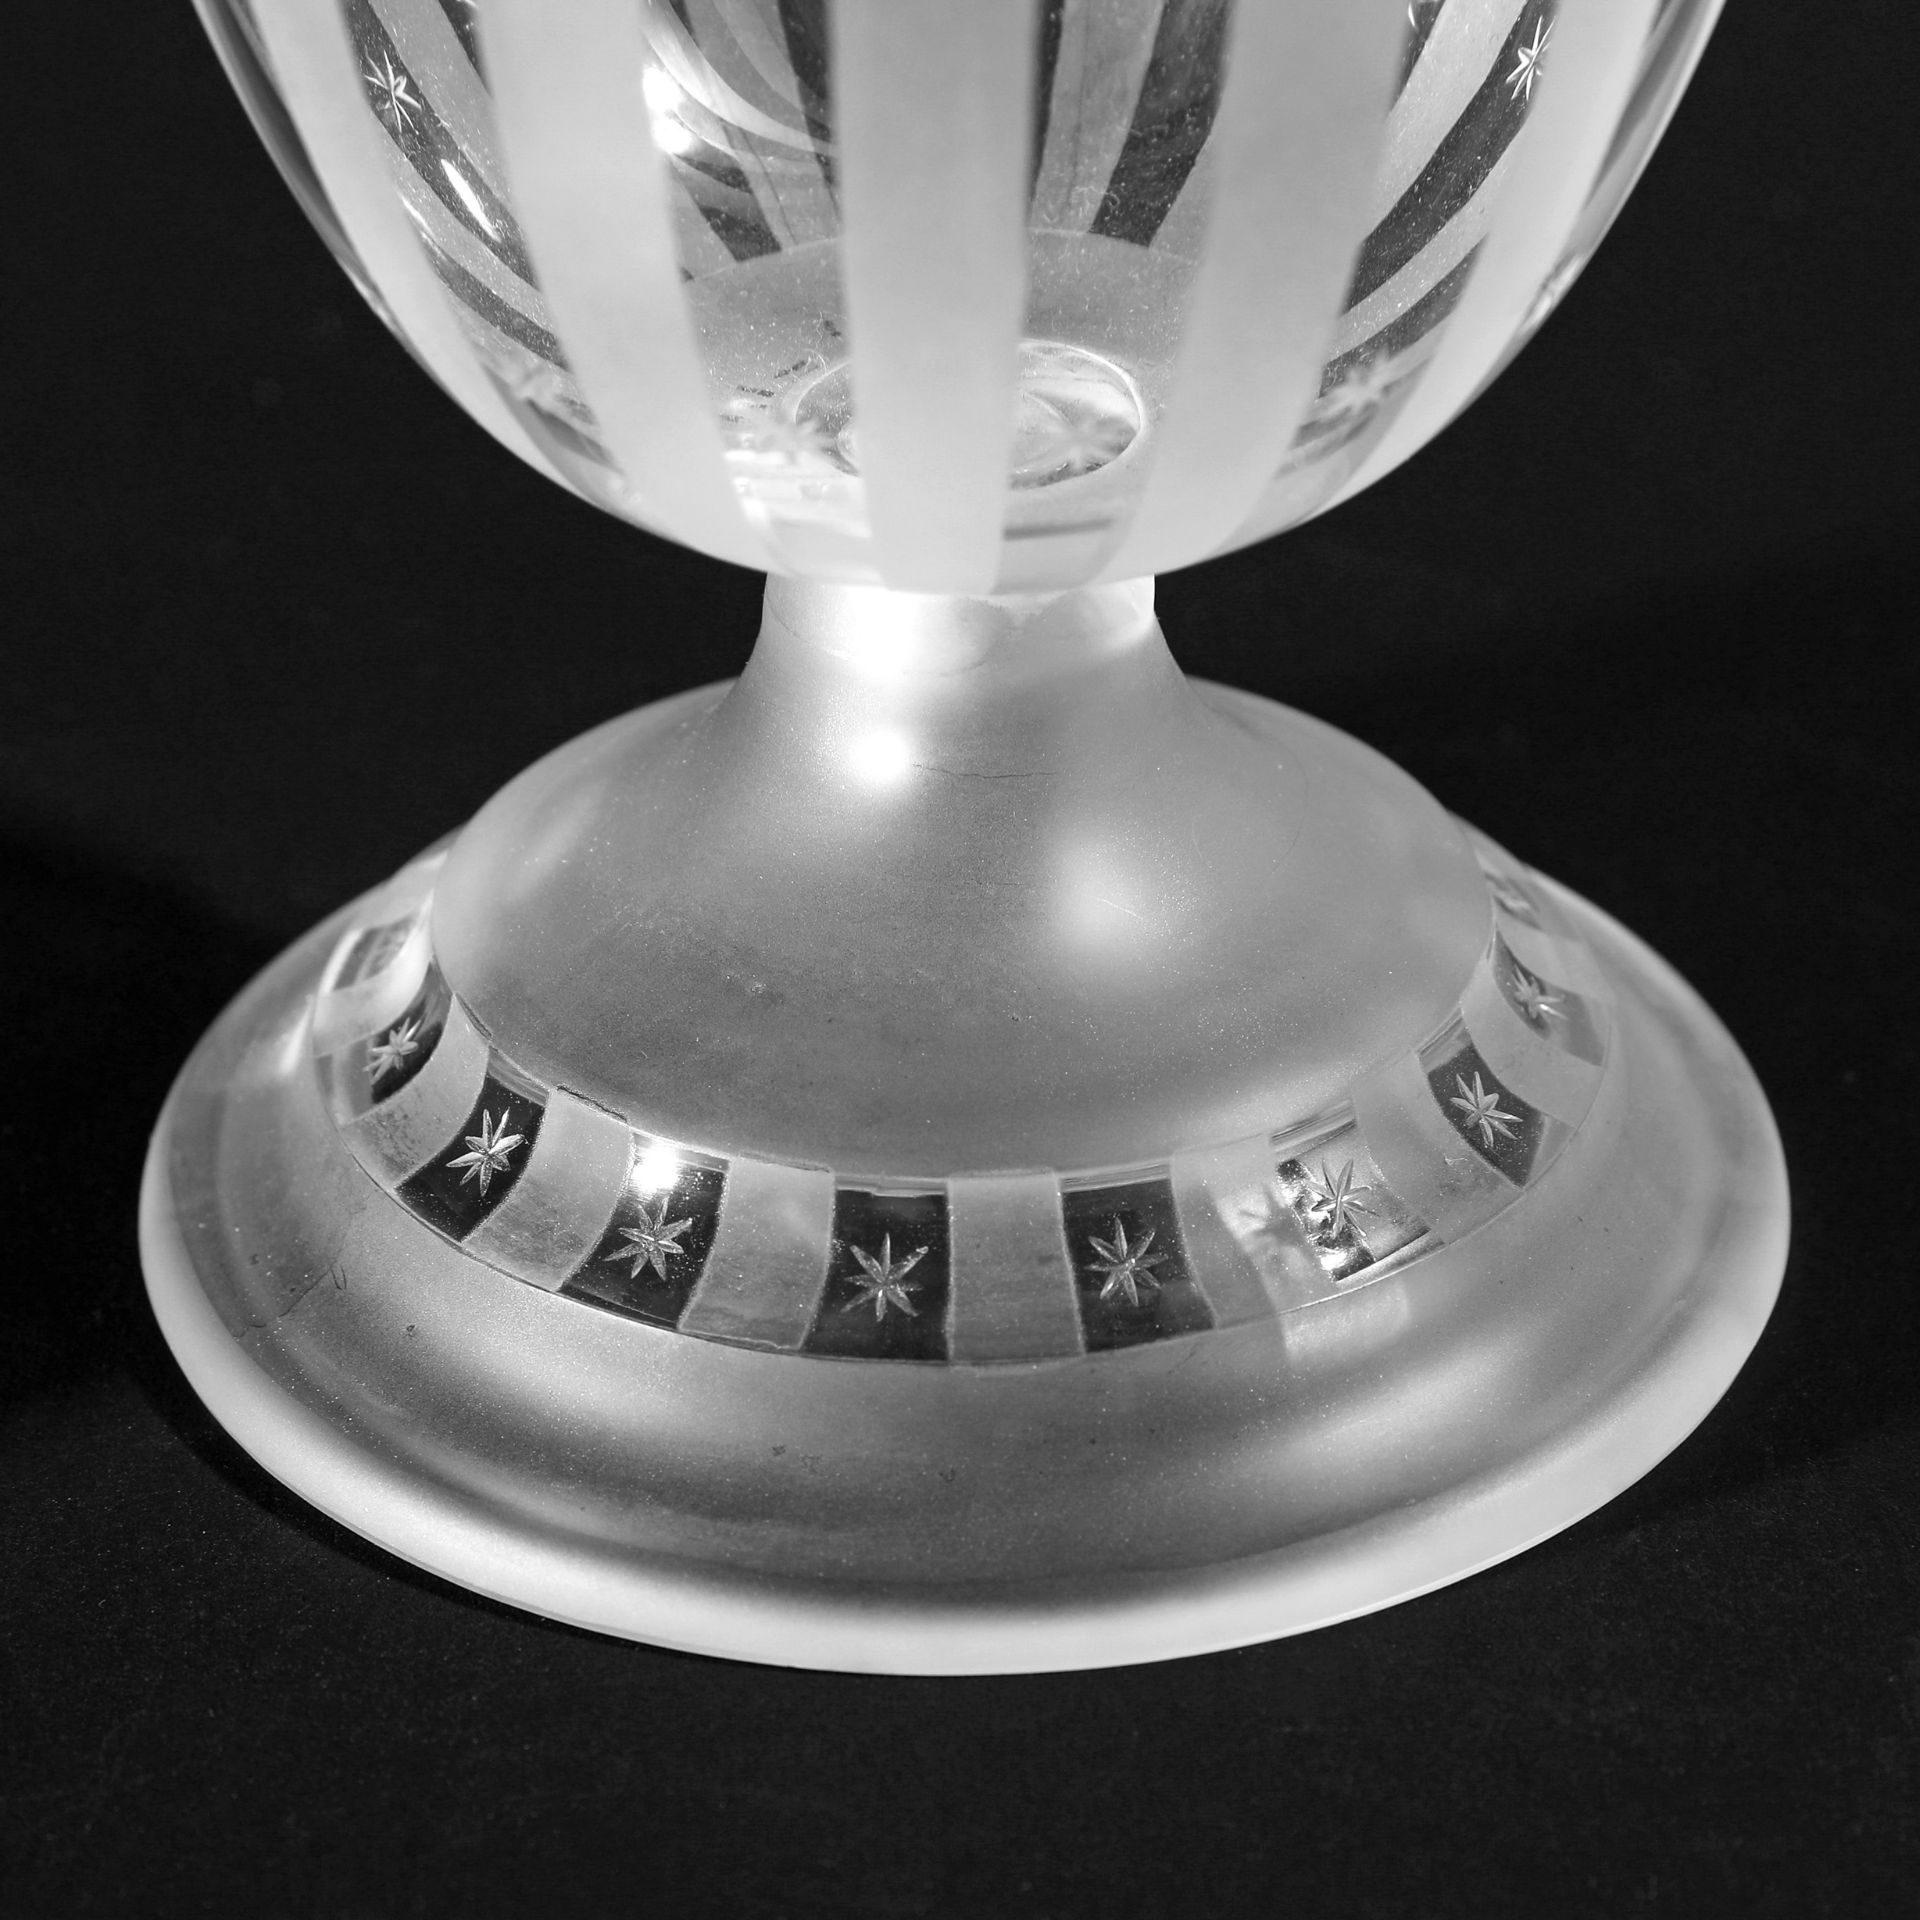 Josef Hoffmann, Wiener Werkstätte, Meyr's Neffe, Star cut Vase - Image 3 of 4